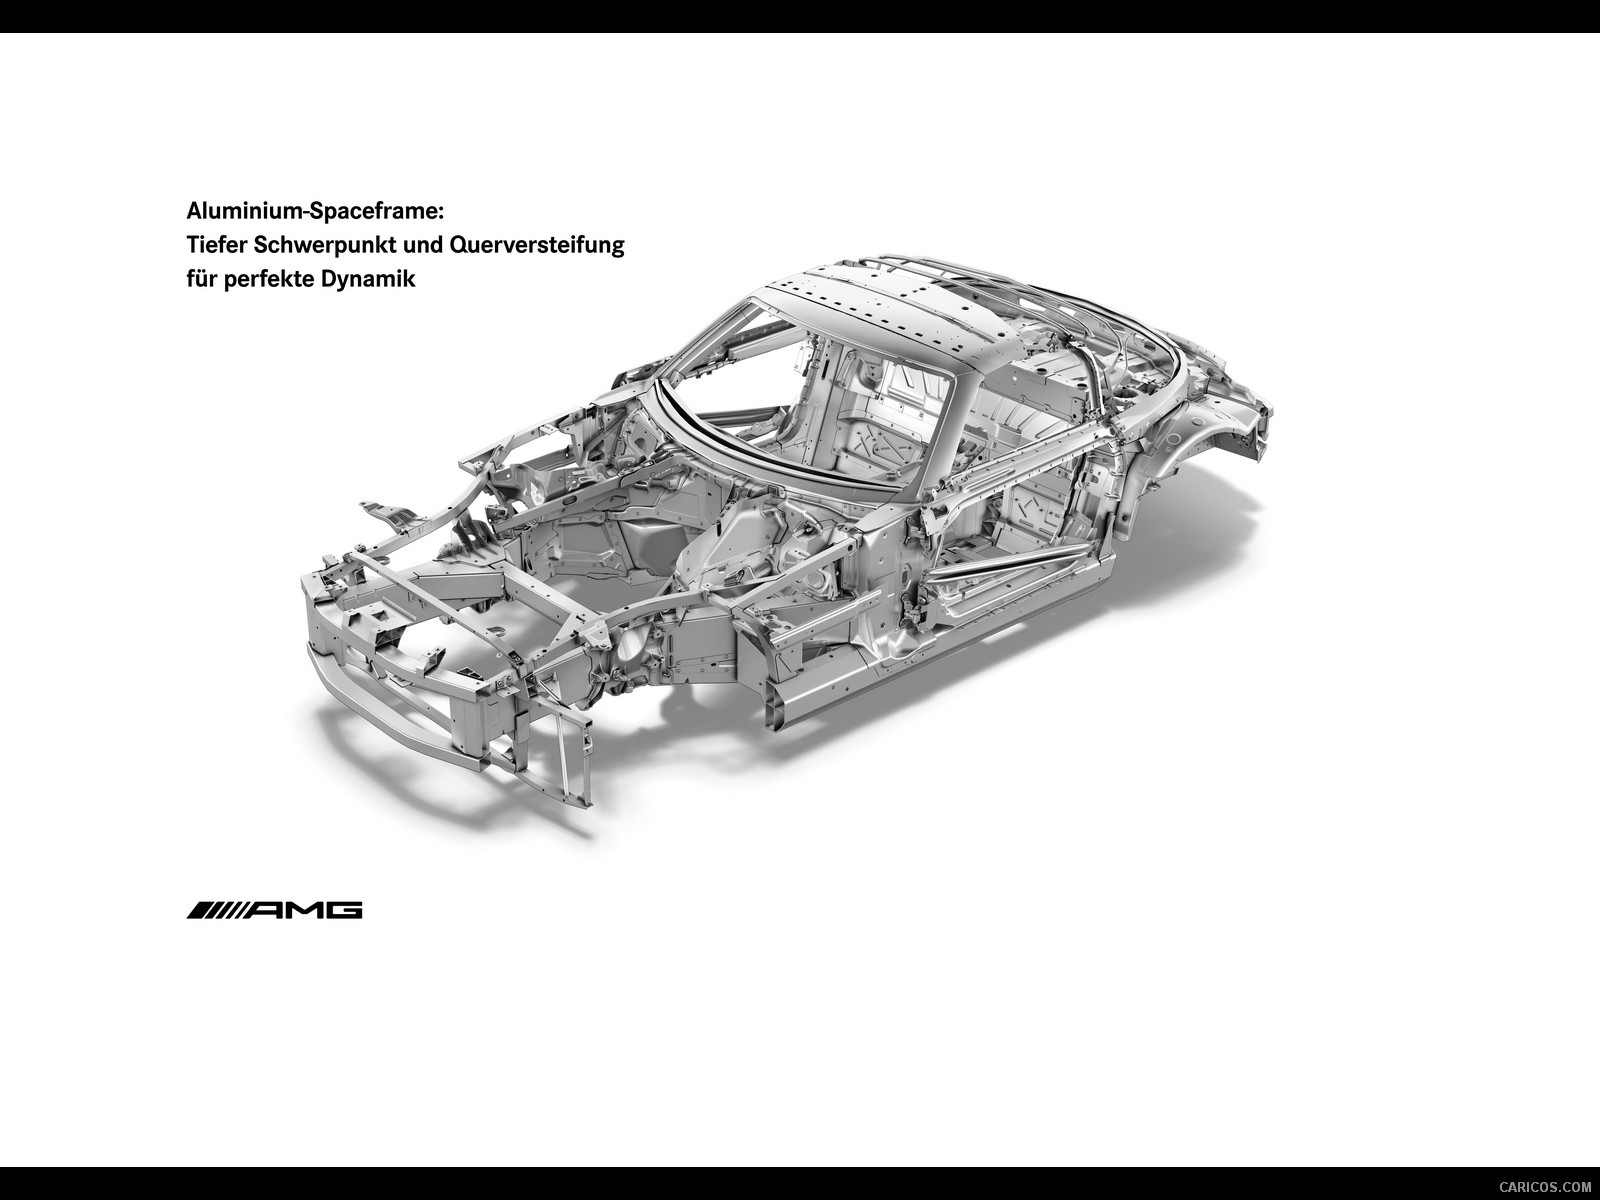 2012 Mercedes-Benz SLS AMG Roadster  aluminium-spaceframe - , #113 of 129